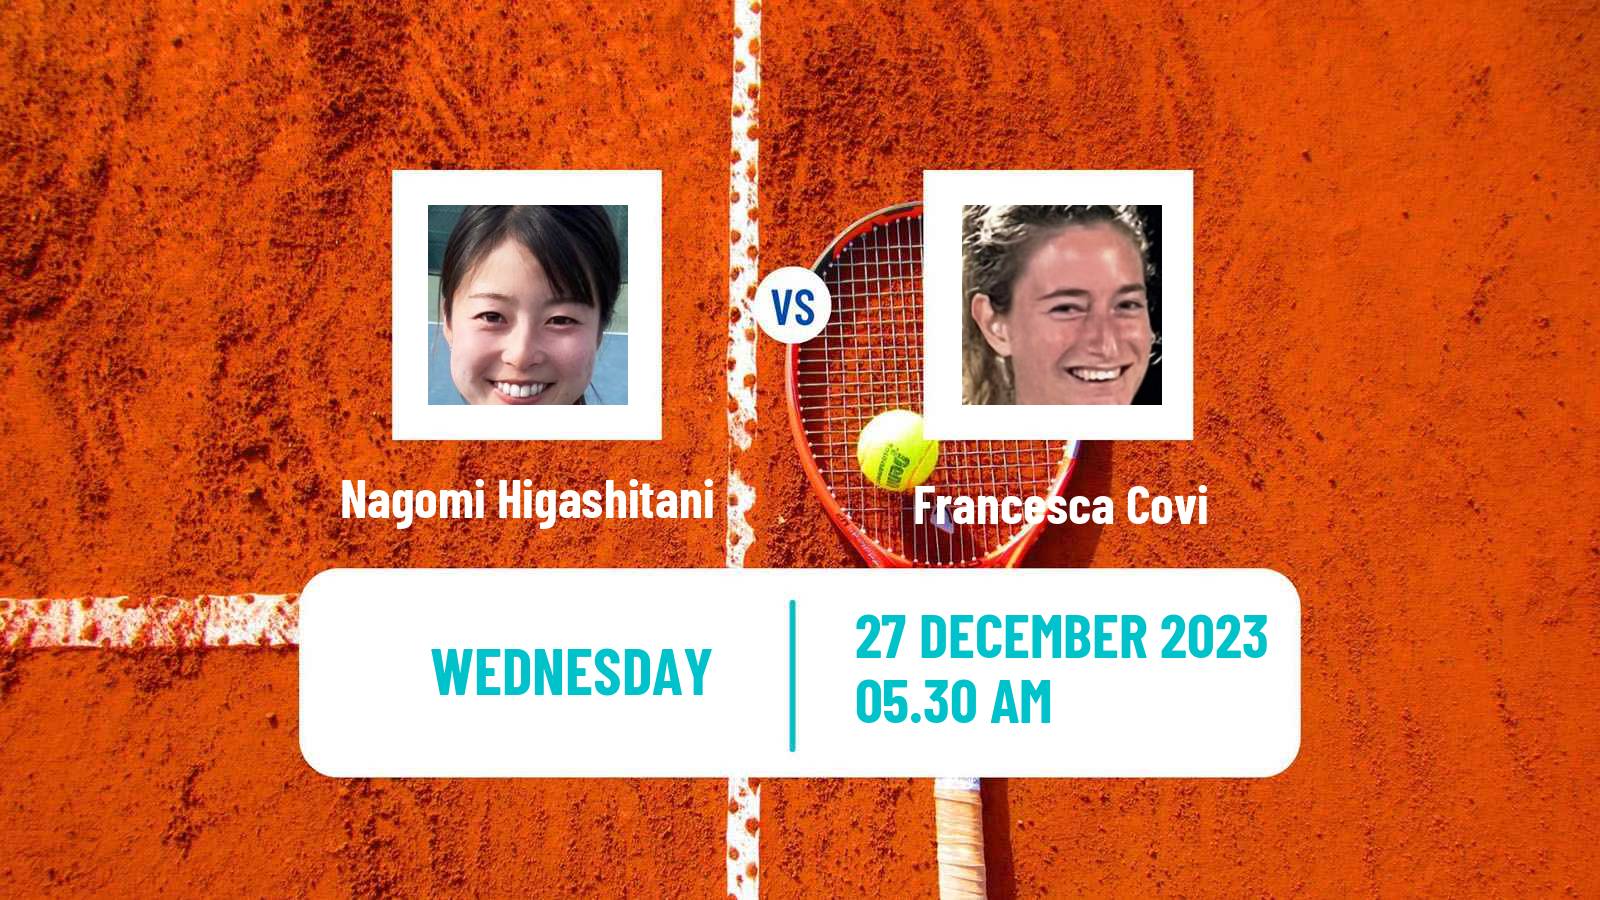 Tennis ITF W15 Monastir 44 Women Nagomi Higashitani - Francesca Covi